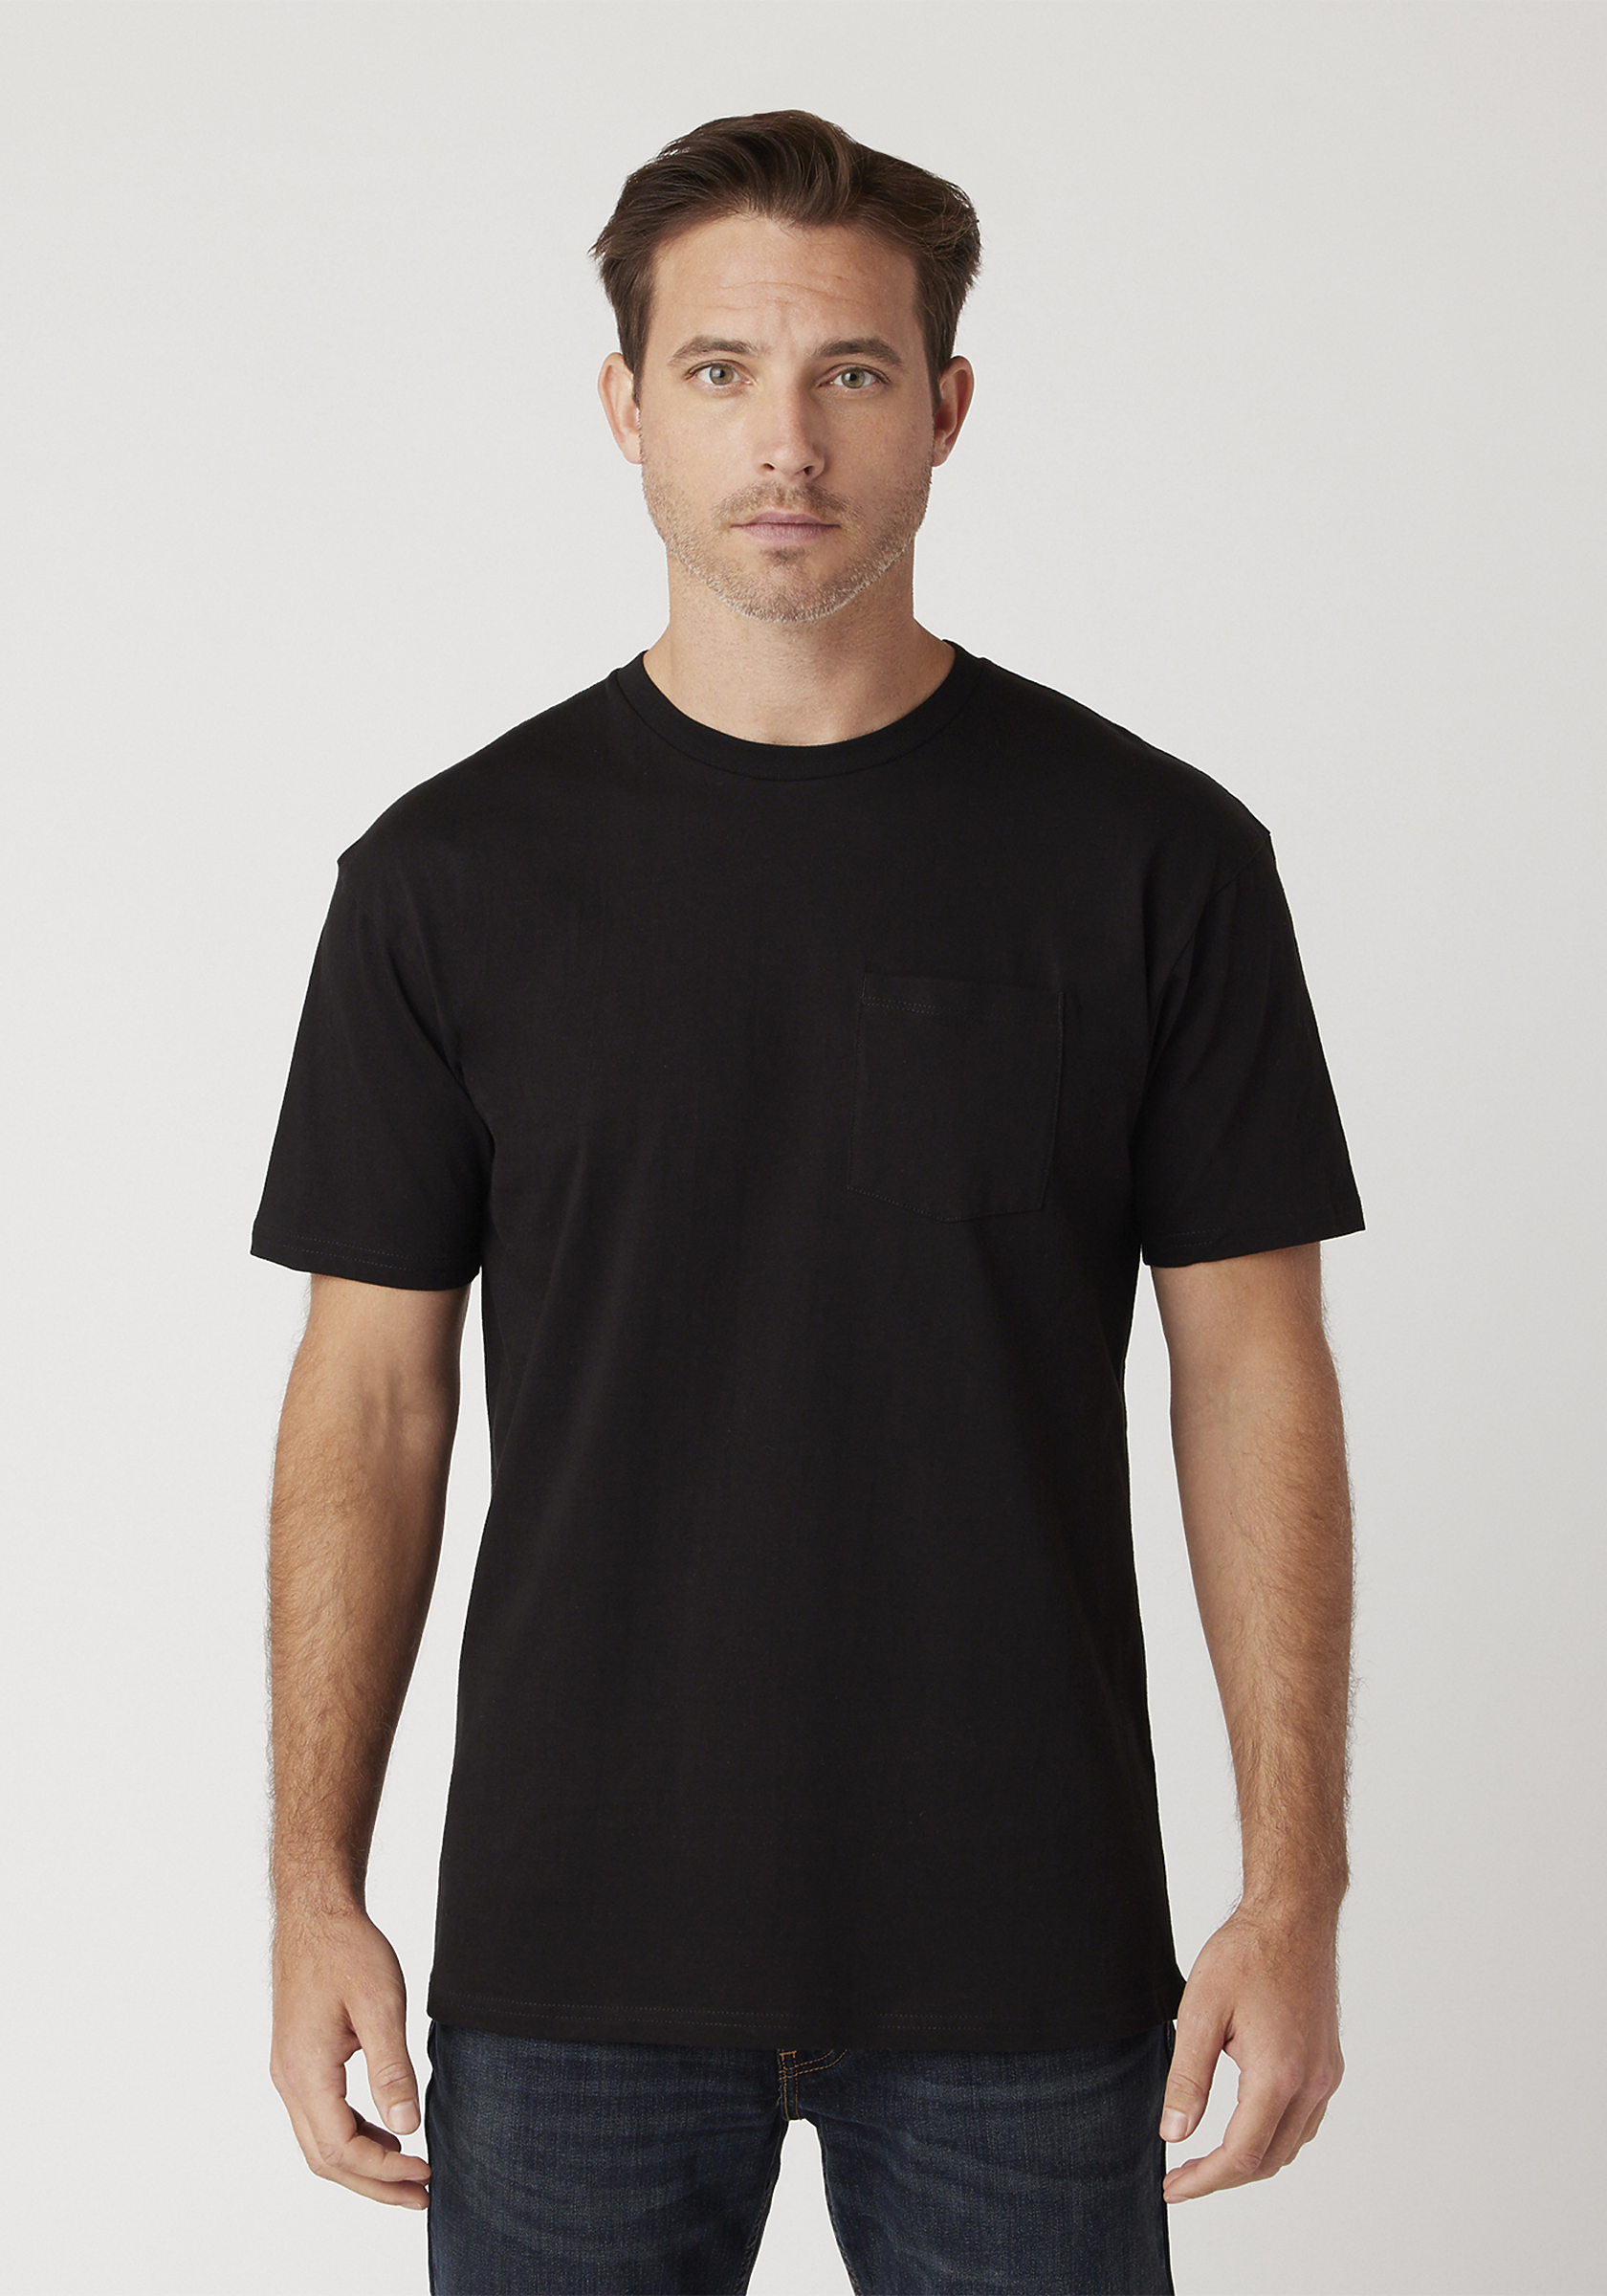 Men's Pocket T-Shirts